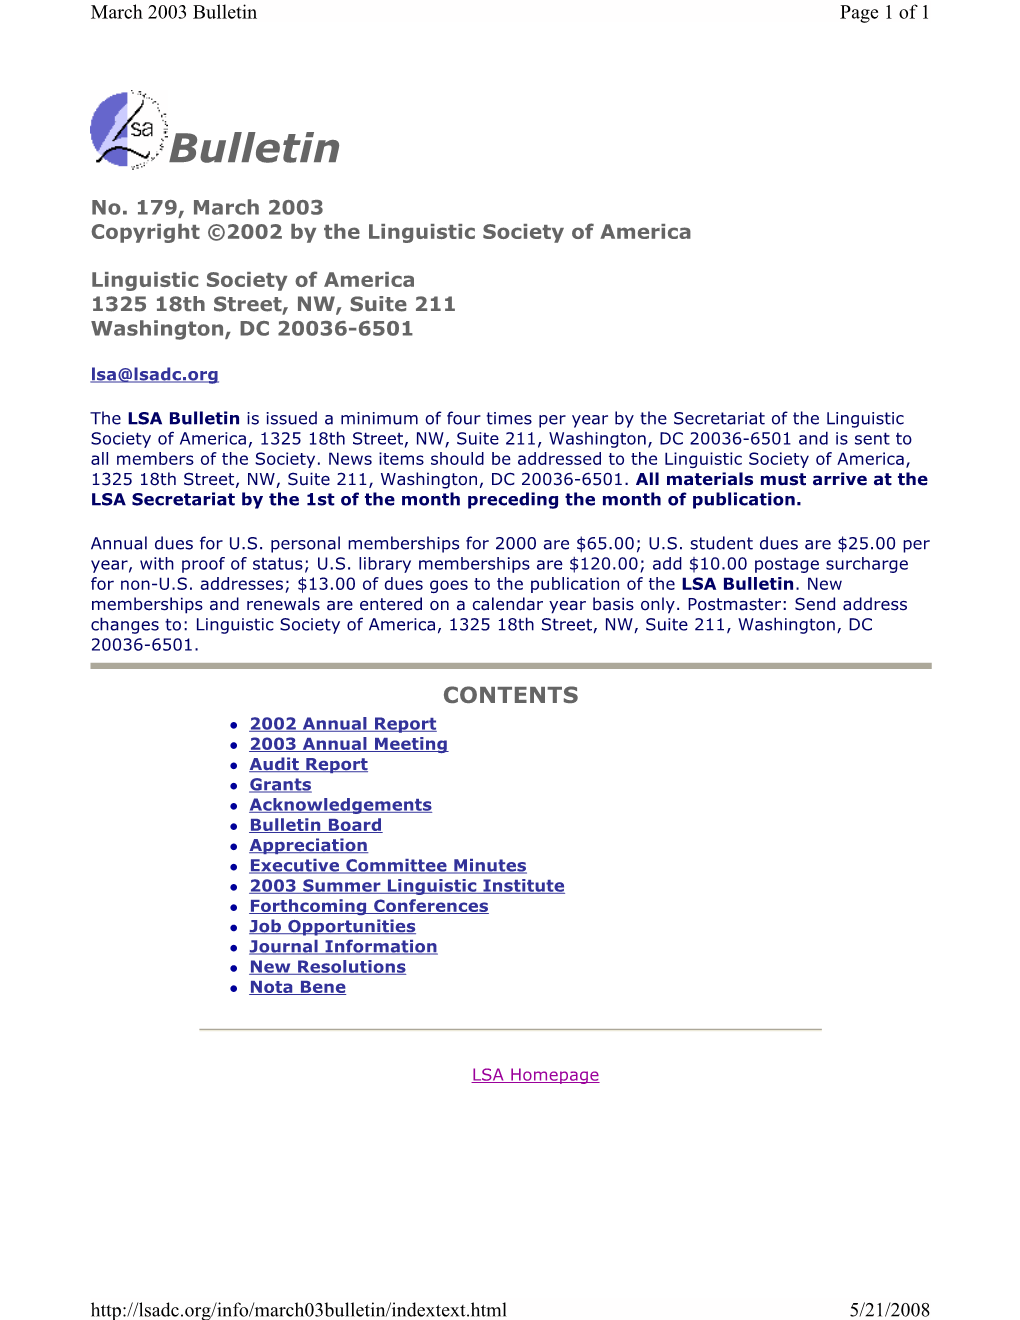 LSA Bulletin 179 March 2003.Pdf